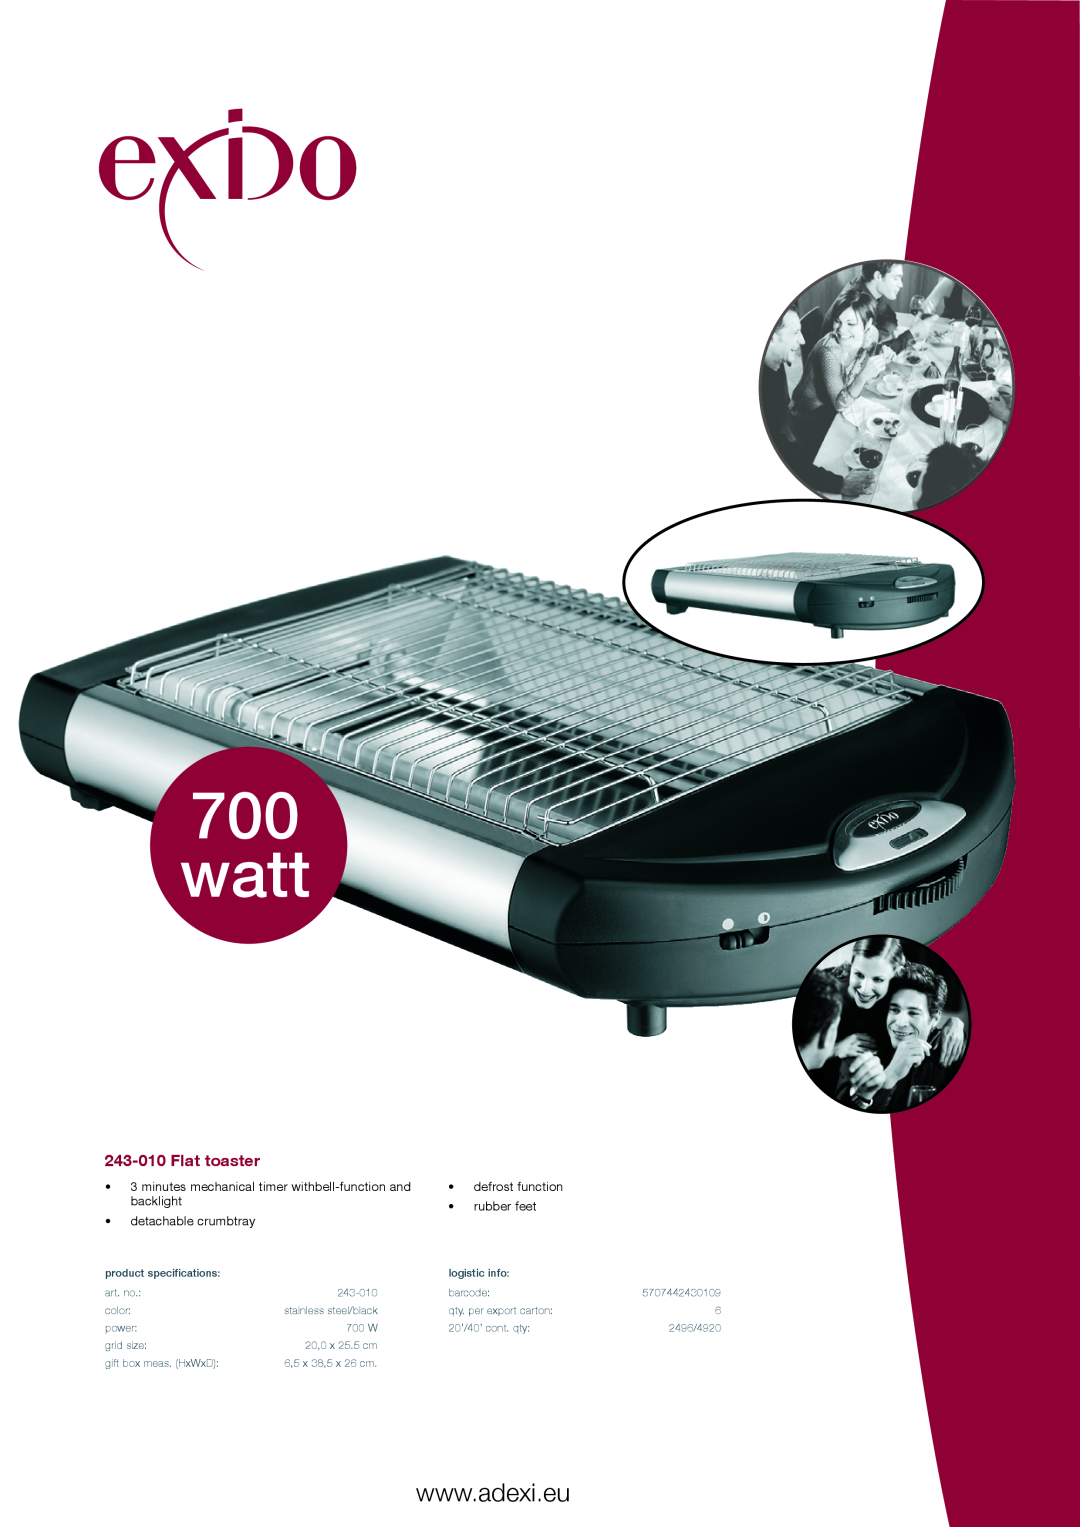 Melissa specifications watt, 243-010Flat toaster, detachable crumbtray, defrost function rubber feet 